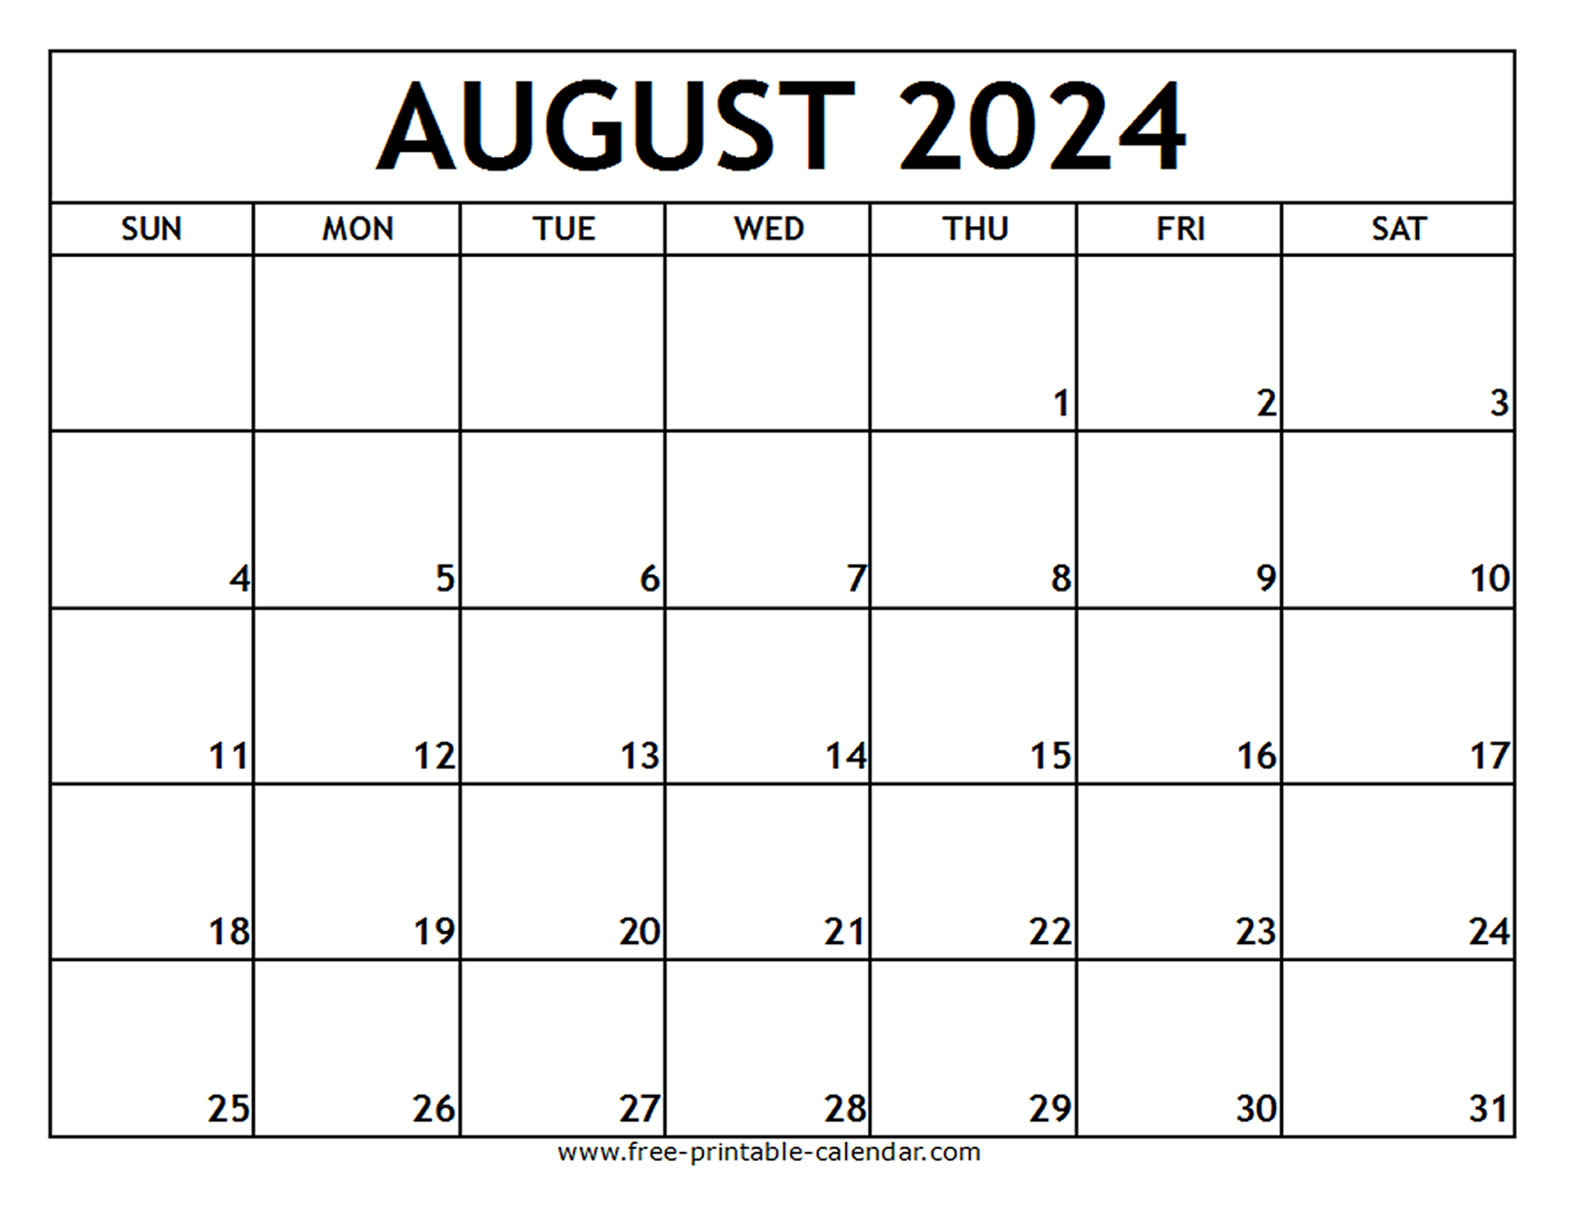 August 2024 Printable Calendar - Free-Printable-Calendar with Free Printable Calendar August 2024 With Title